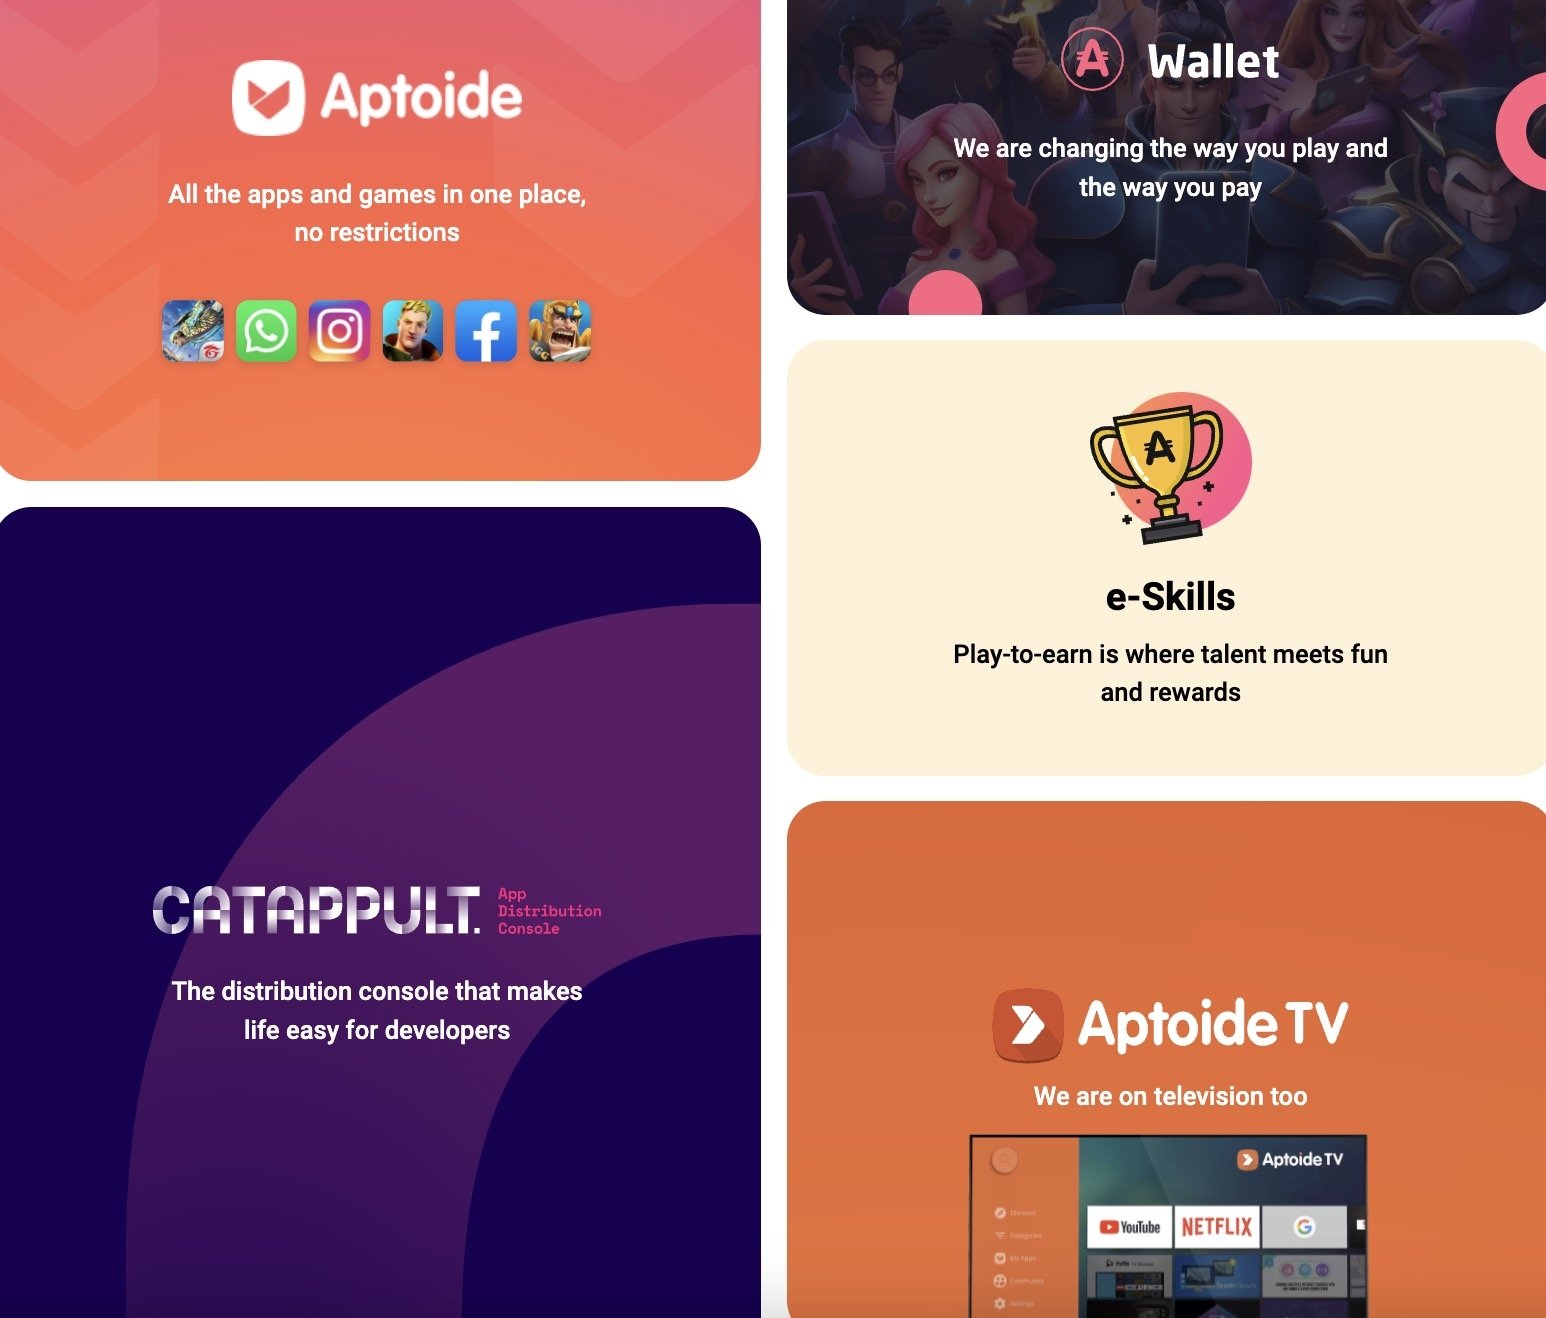 Pagina web de Aptoide